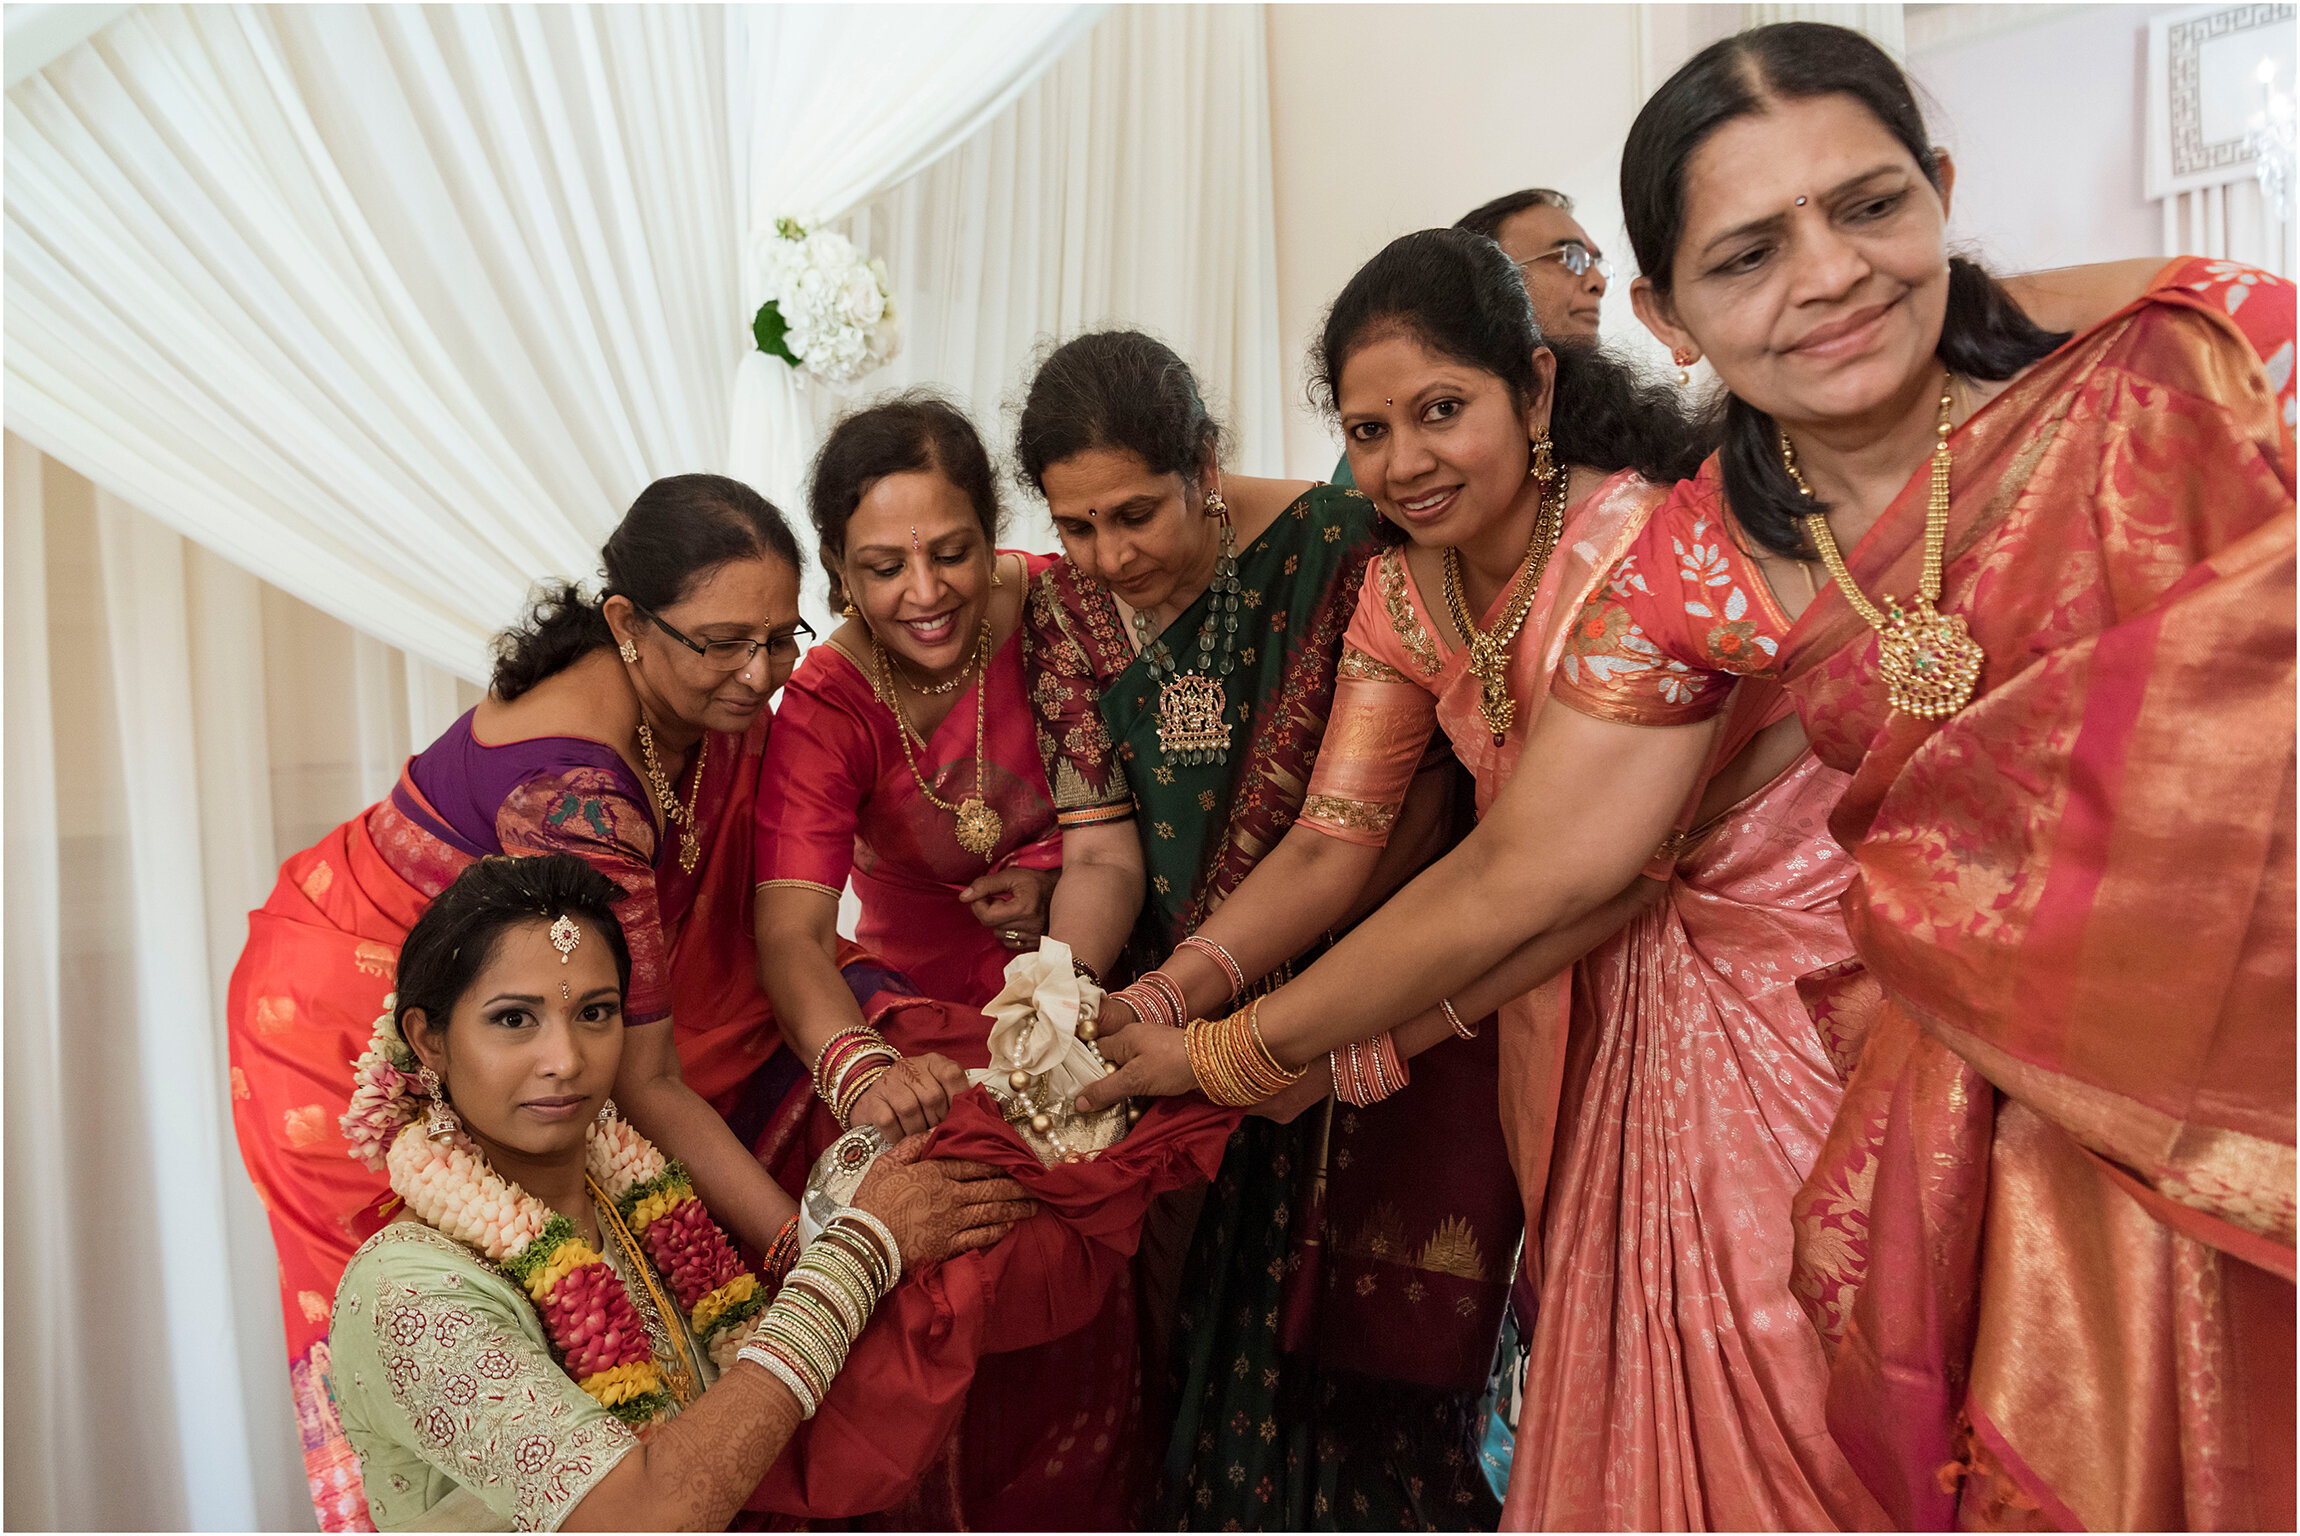 ©FianderFoto_Hindu Wedding_Bermuda_089.jpg